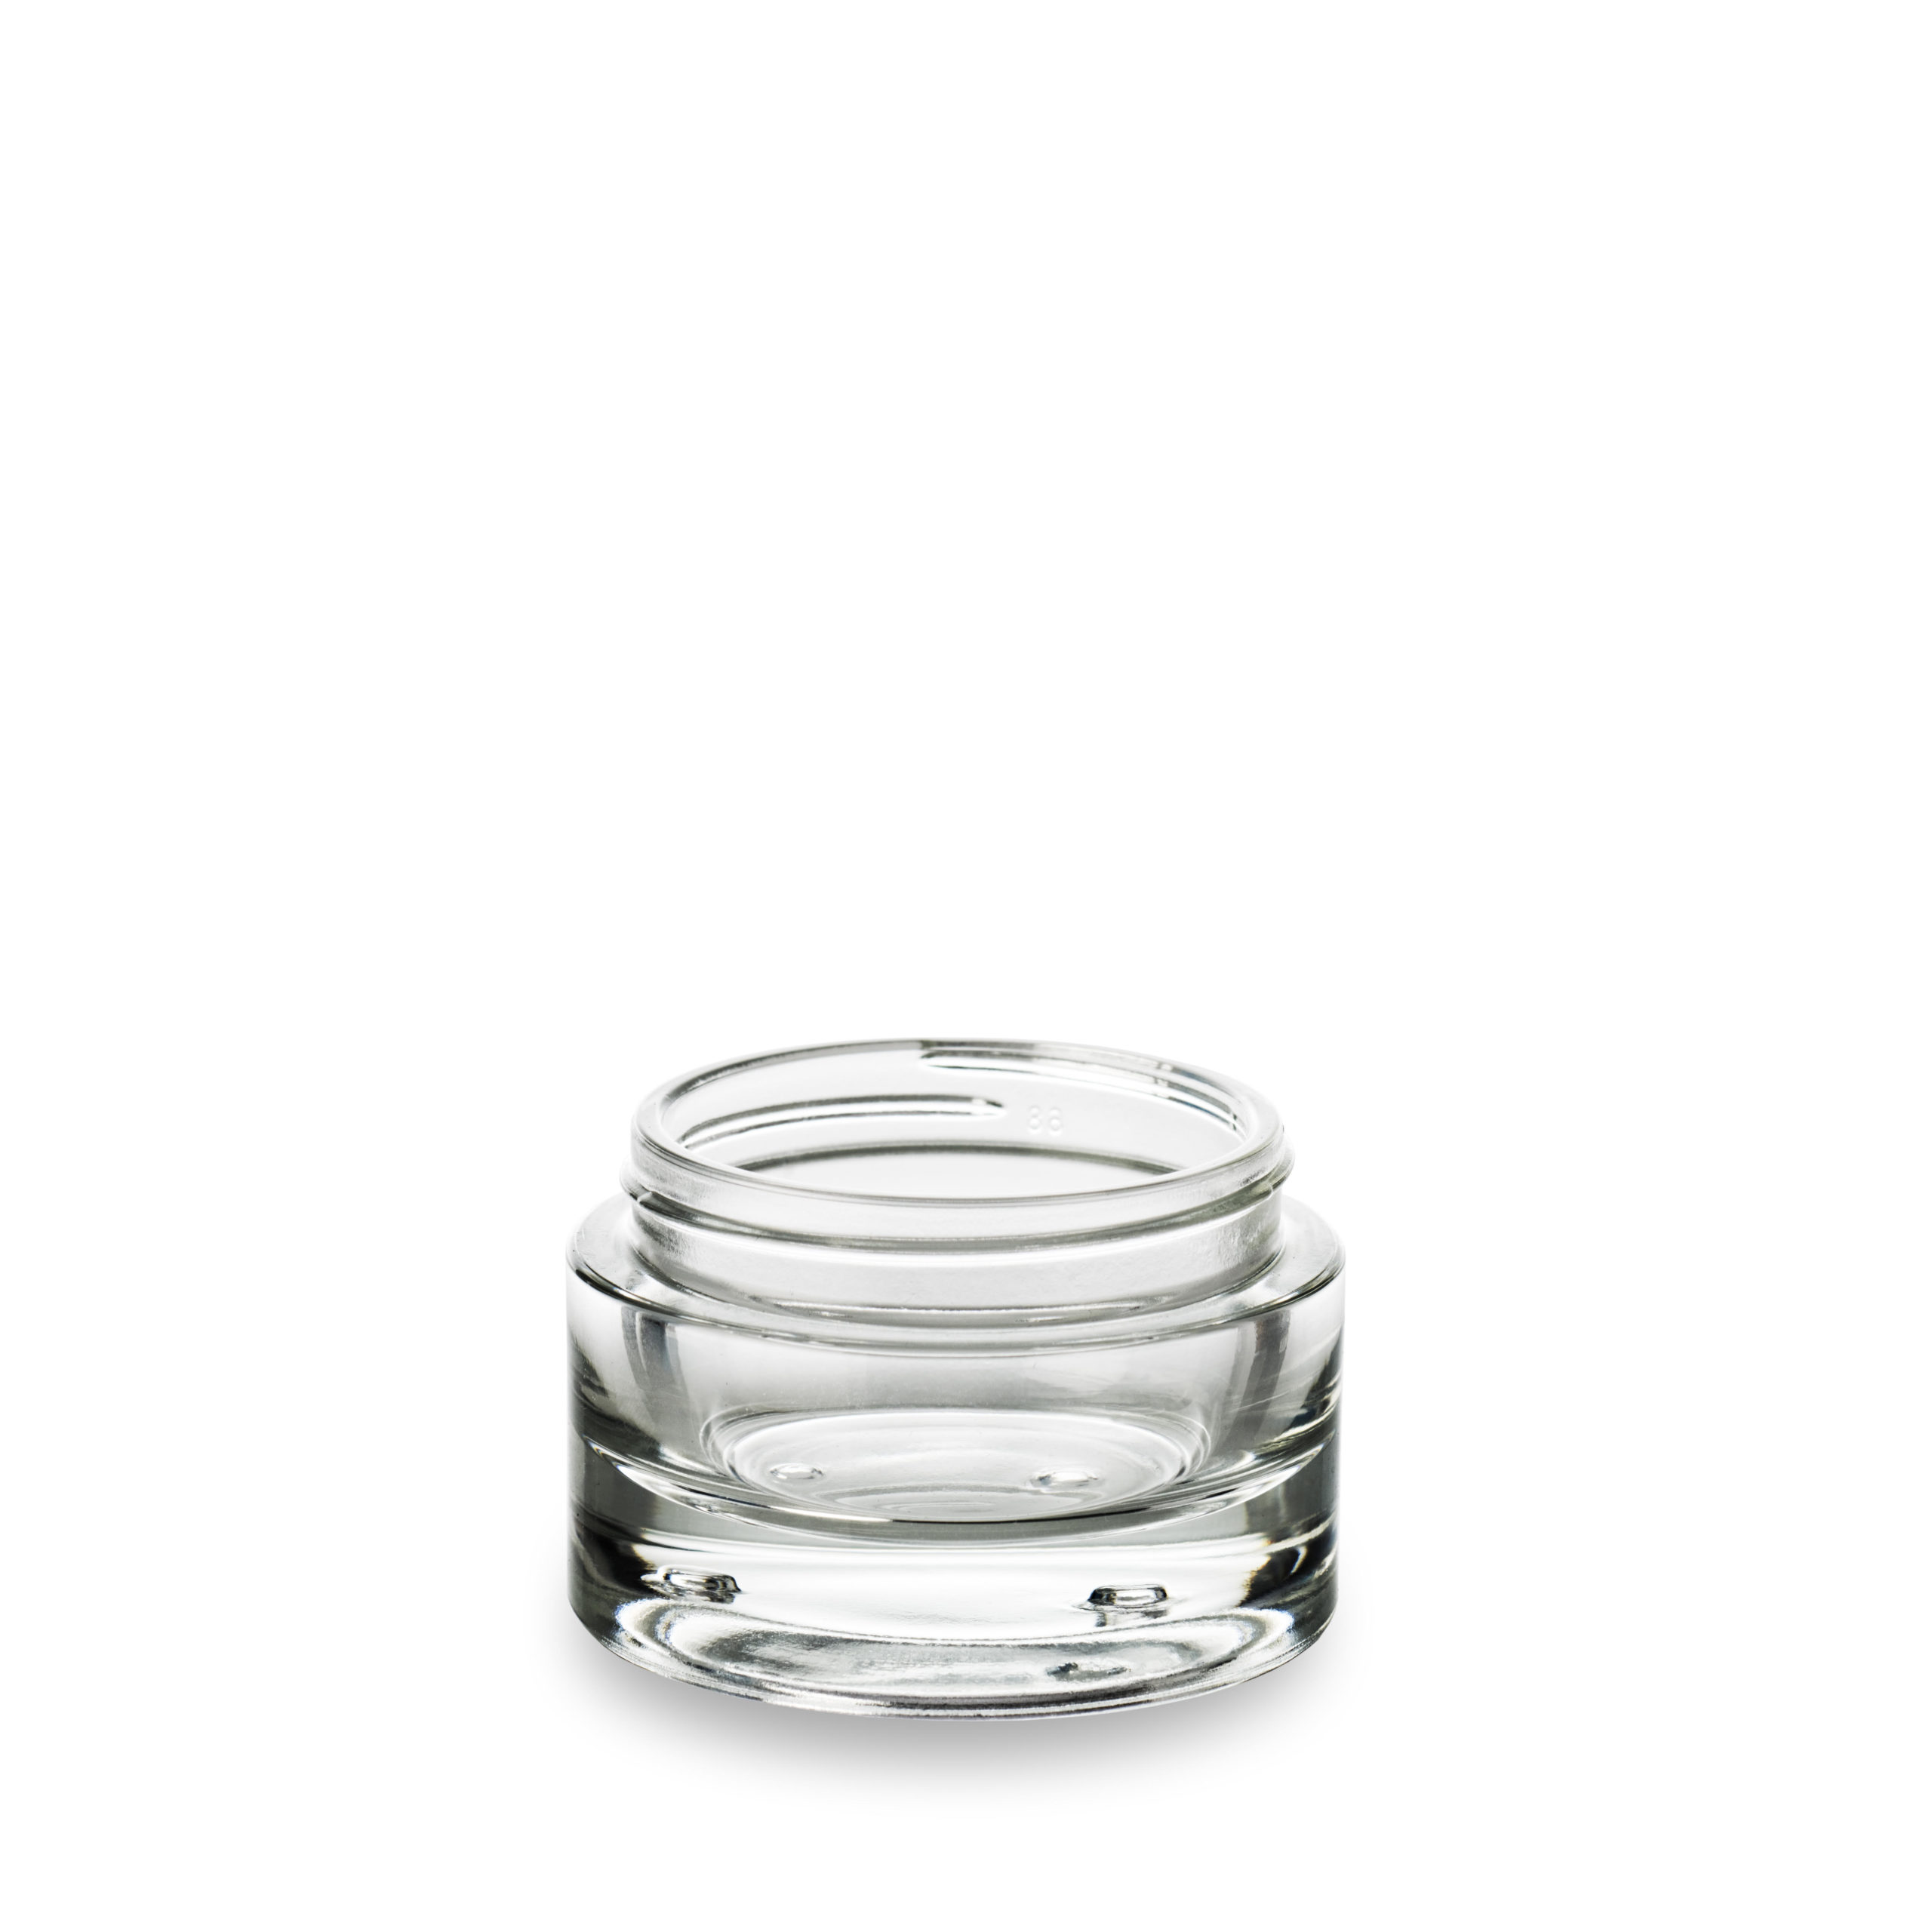 A premium 50 ml glass cosmetic jar